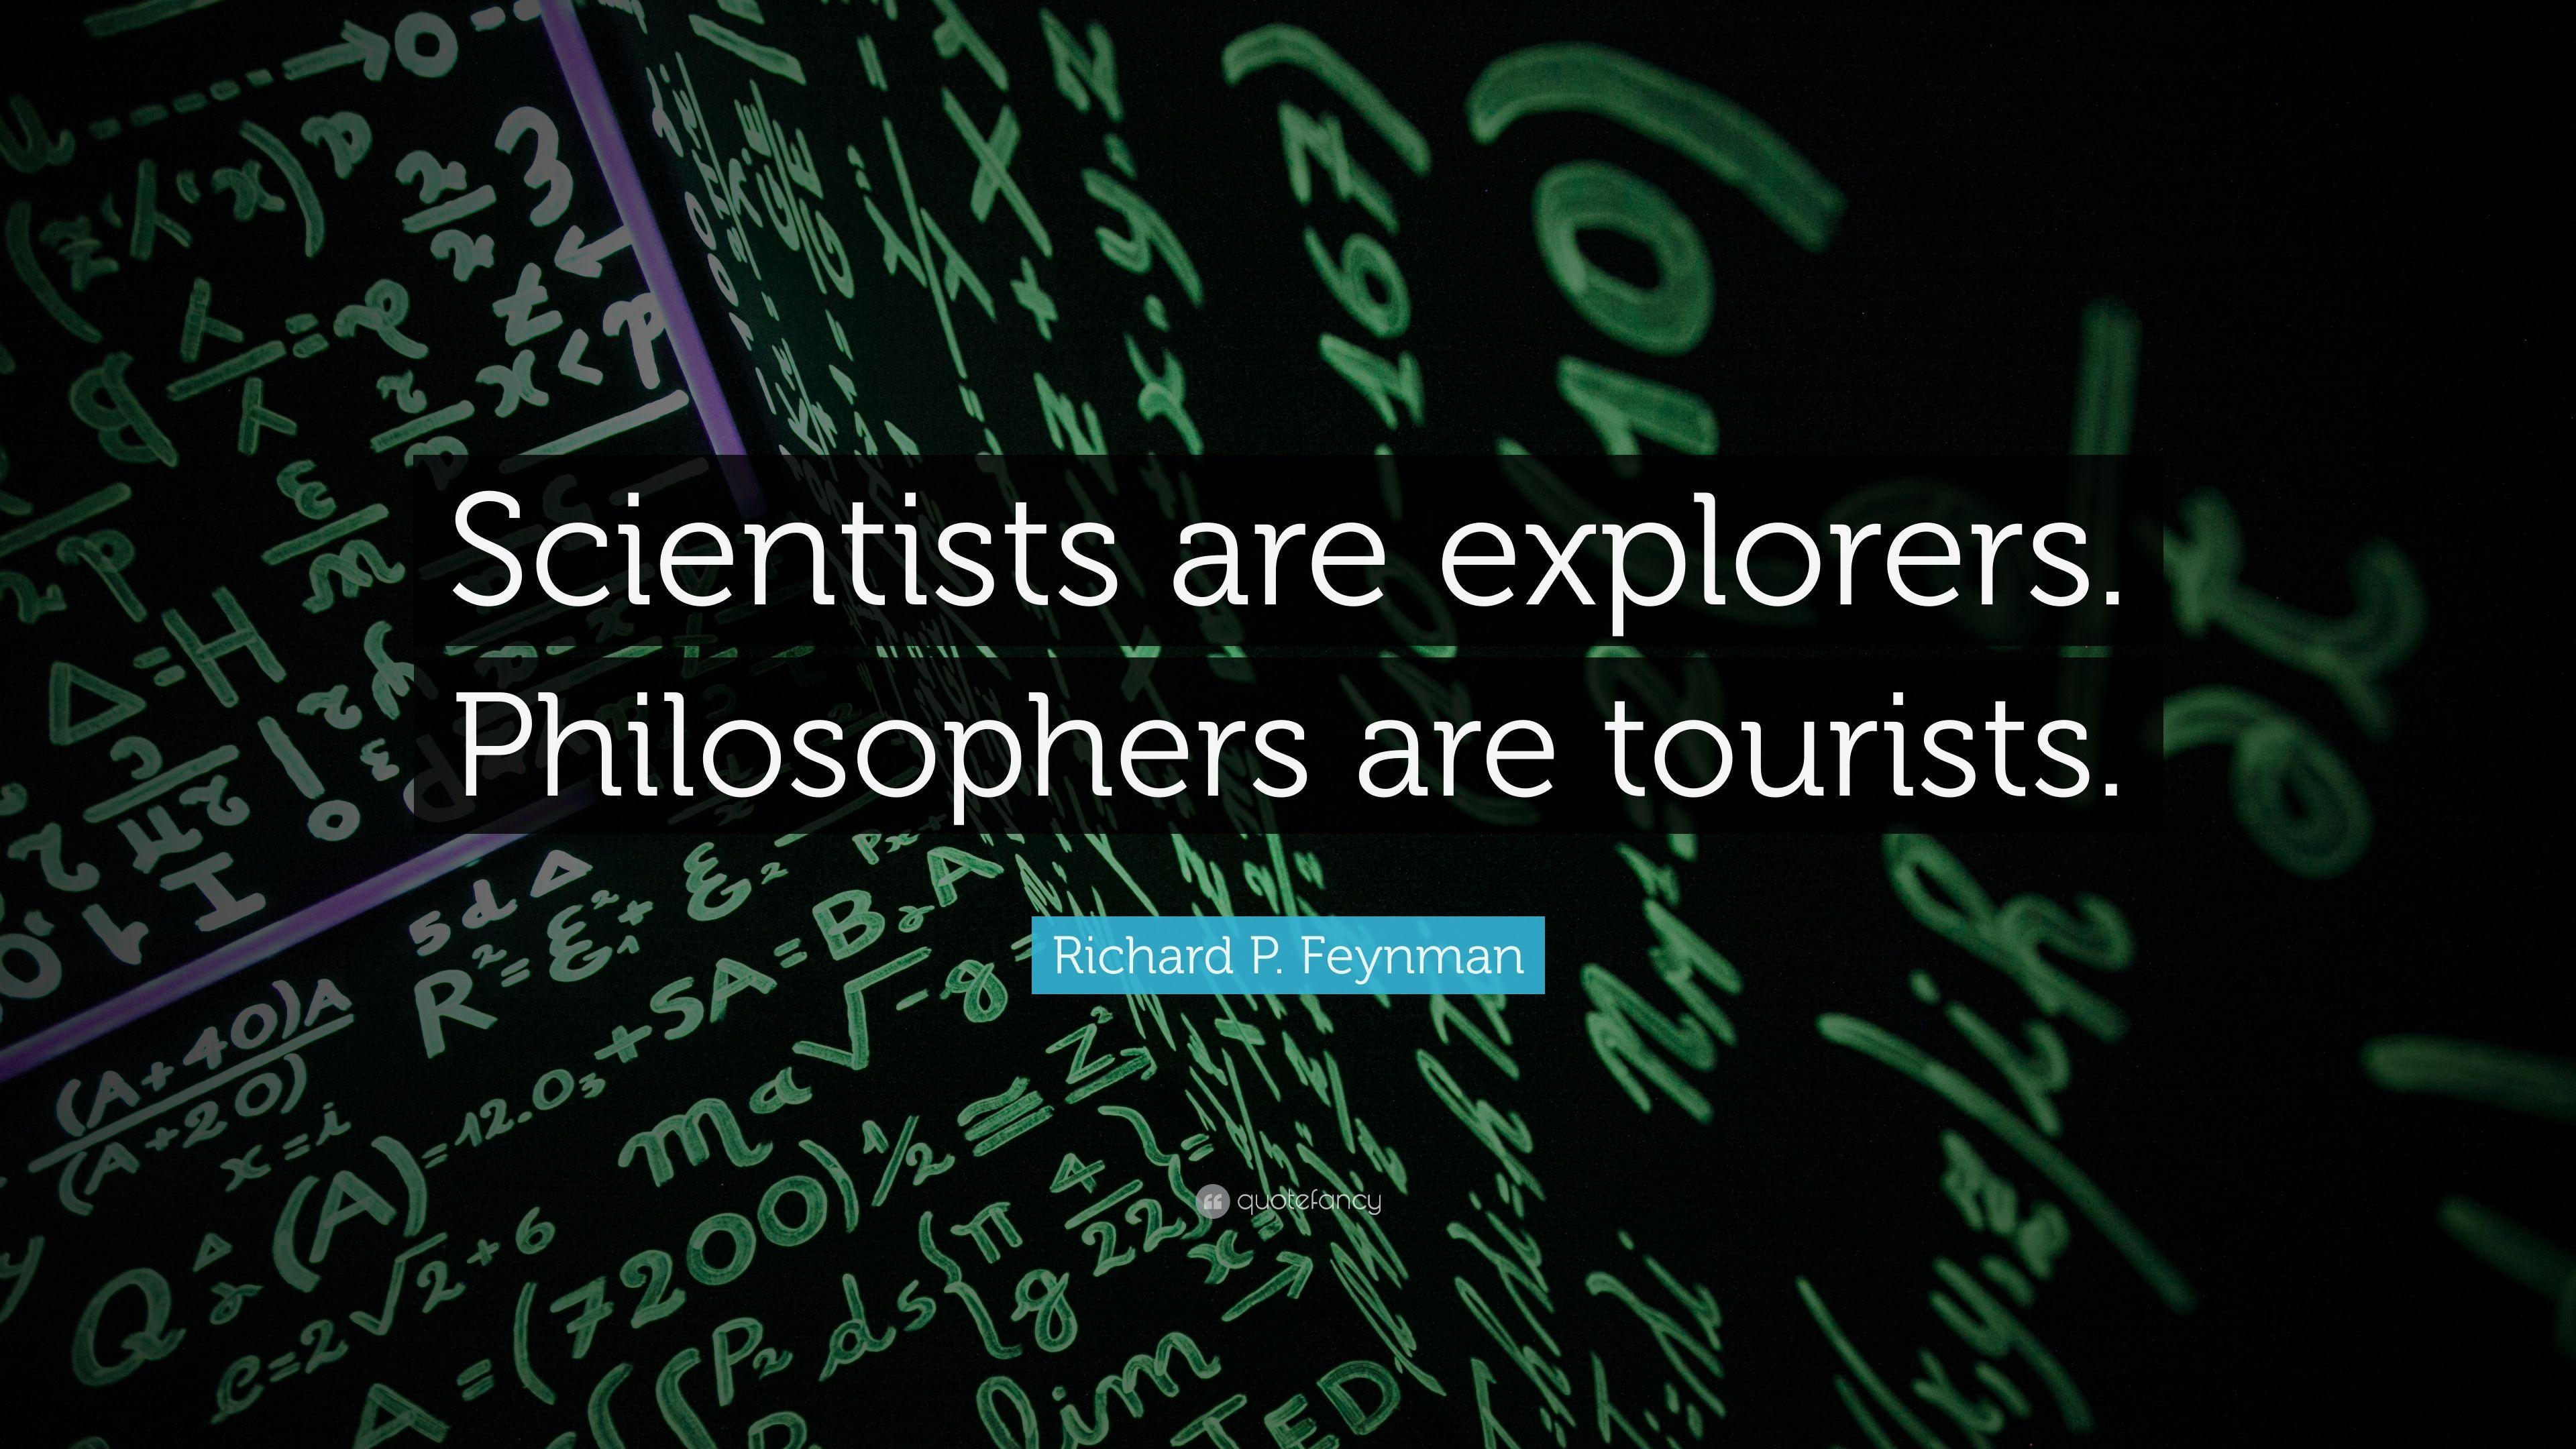 Richard P. Feynman Quote: “Scientists are explorers. Philosophers